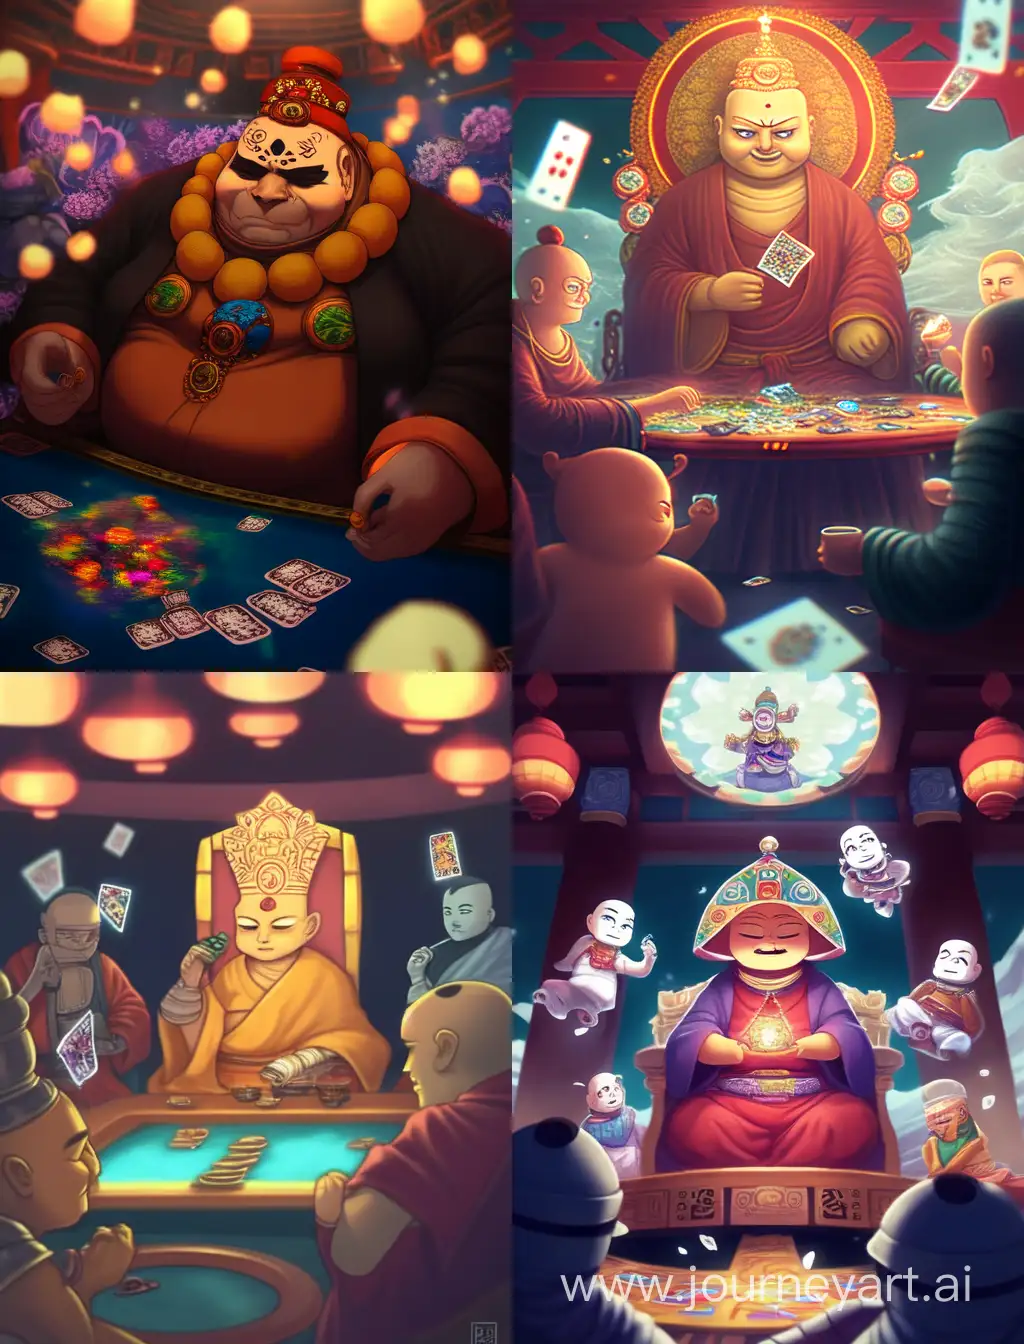 Serene-Buddha-Engaged-in-Poker-Playful-Contemplation